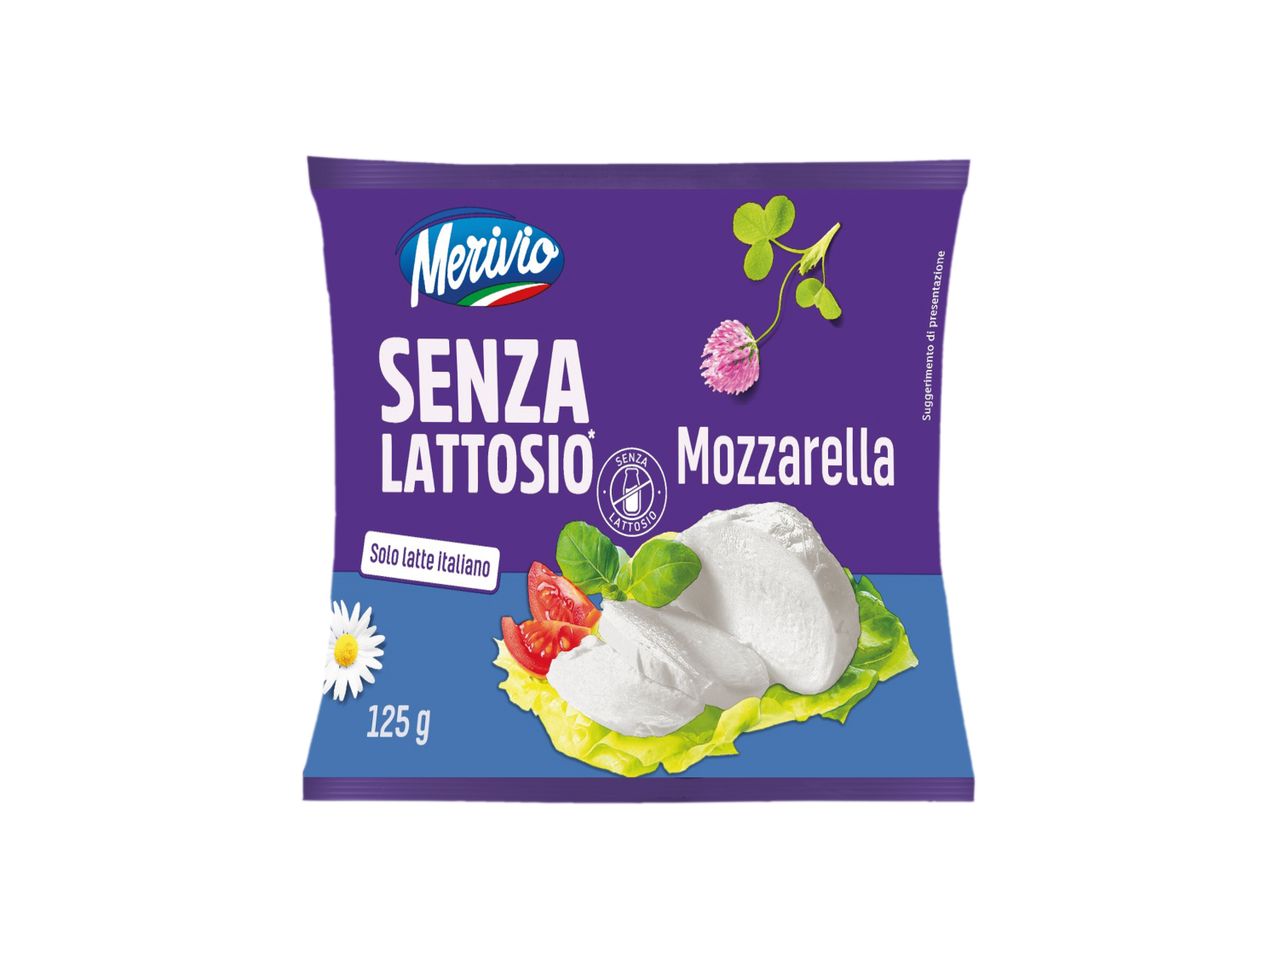 Go to full screen view: Lactose-free Mozzarella - Image 1